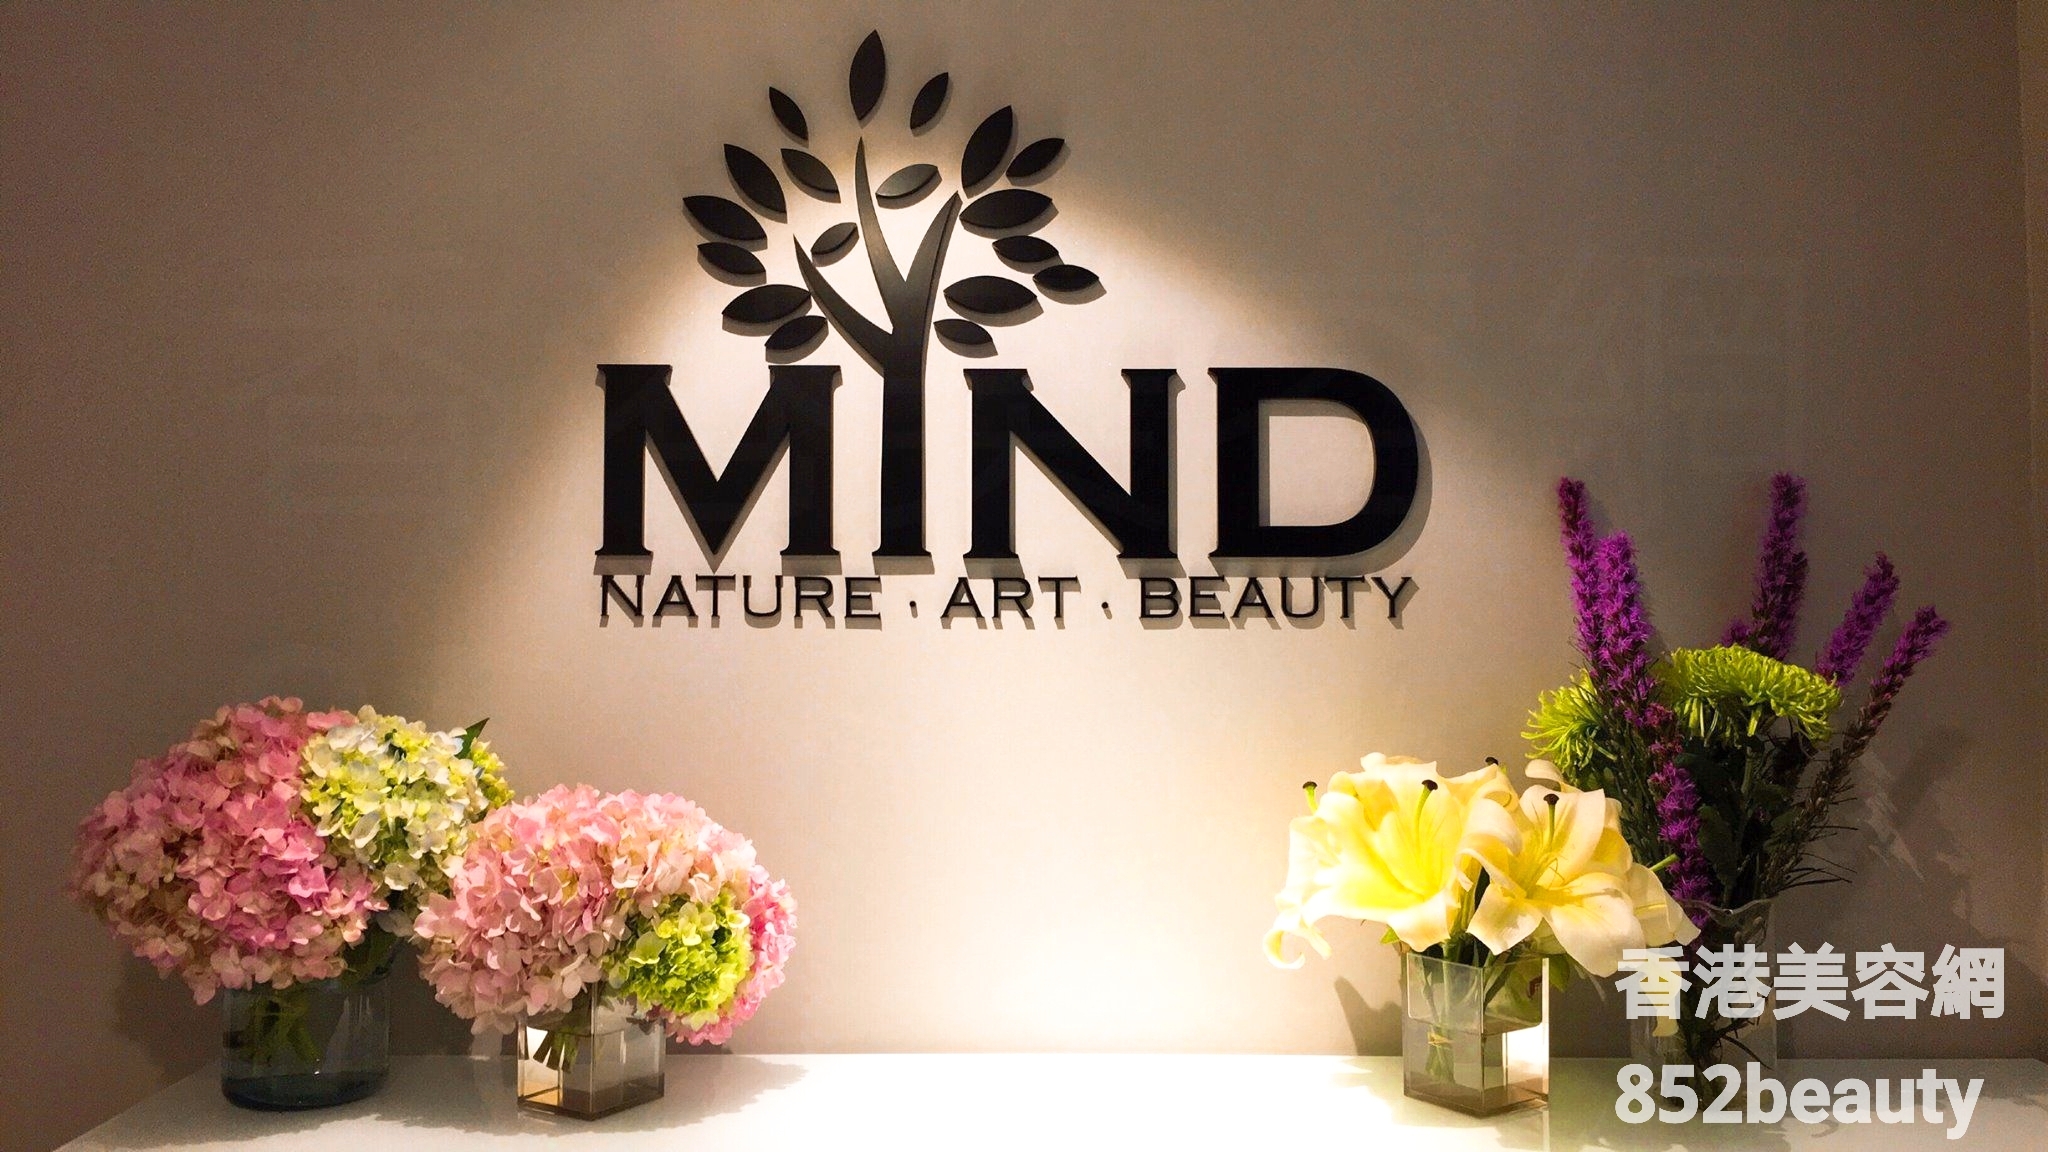 美容院 Beauty Salon: MIND nature art beauty